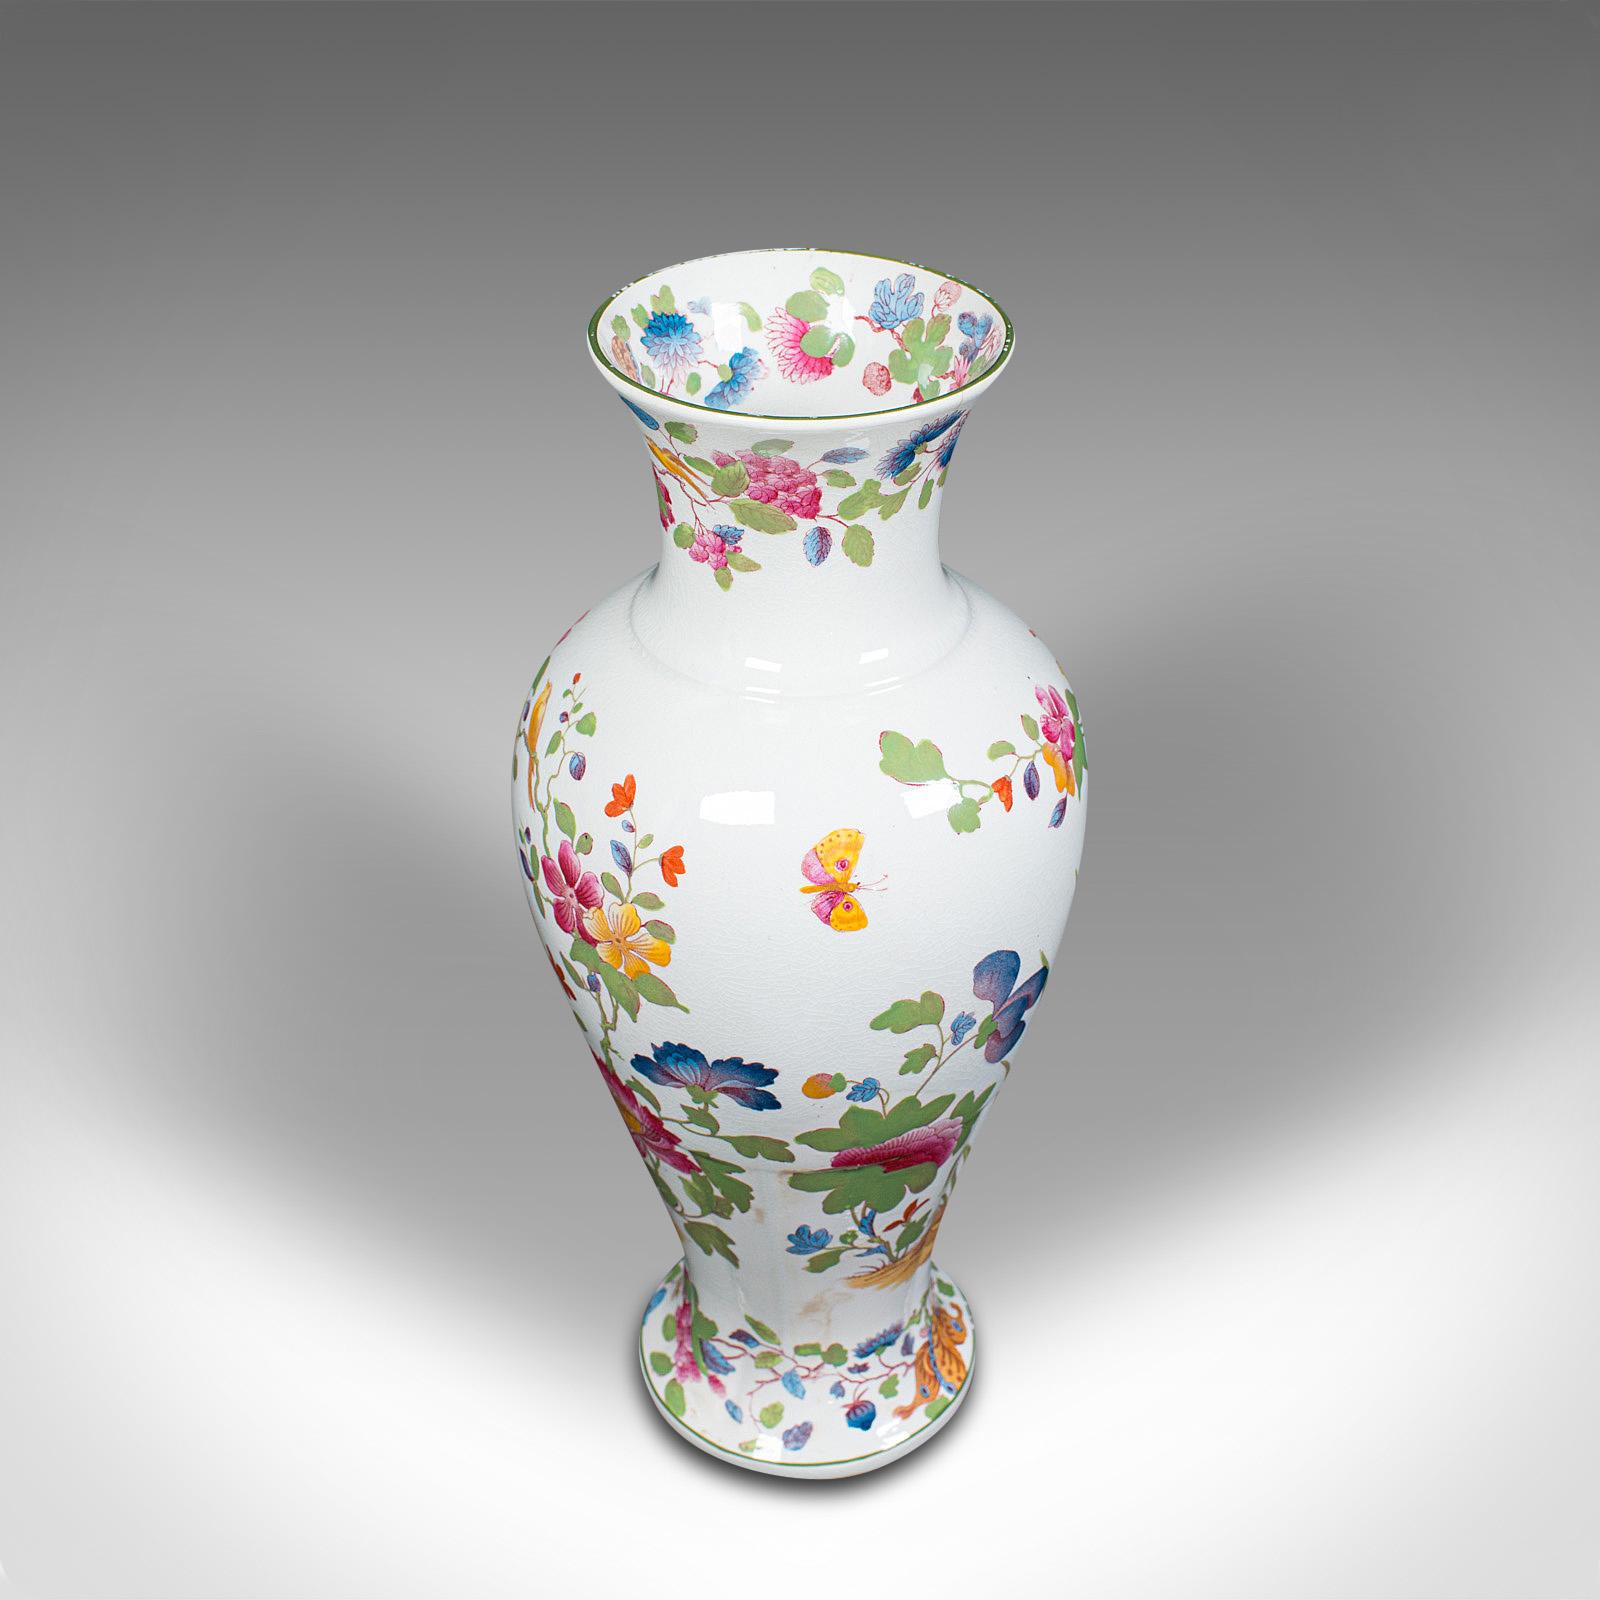 Antique Baluster Posy Vase, English, Ceramic, Decorative, Flower Urn, Circa 1920 For Sale 2